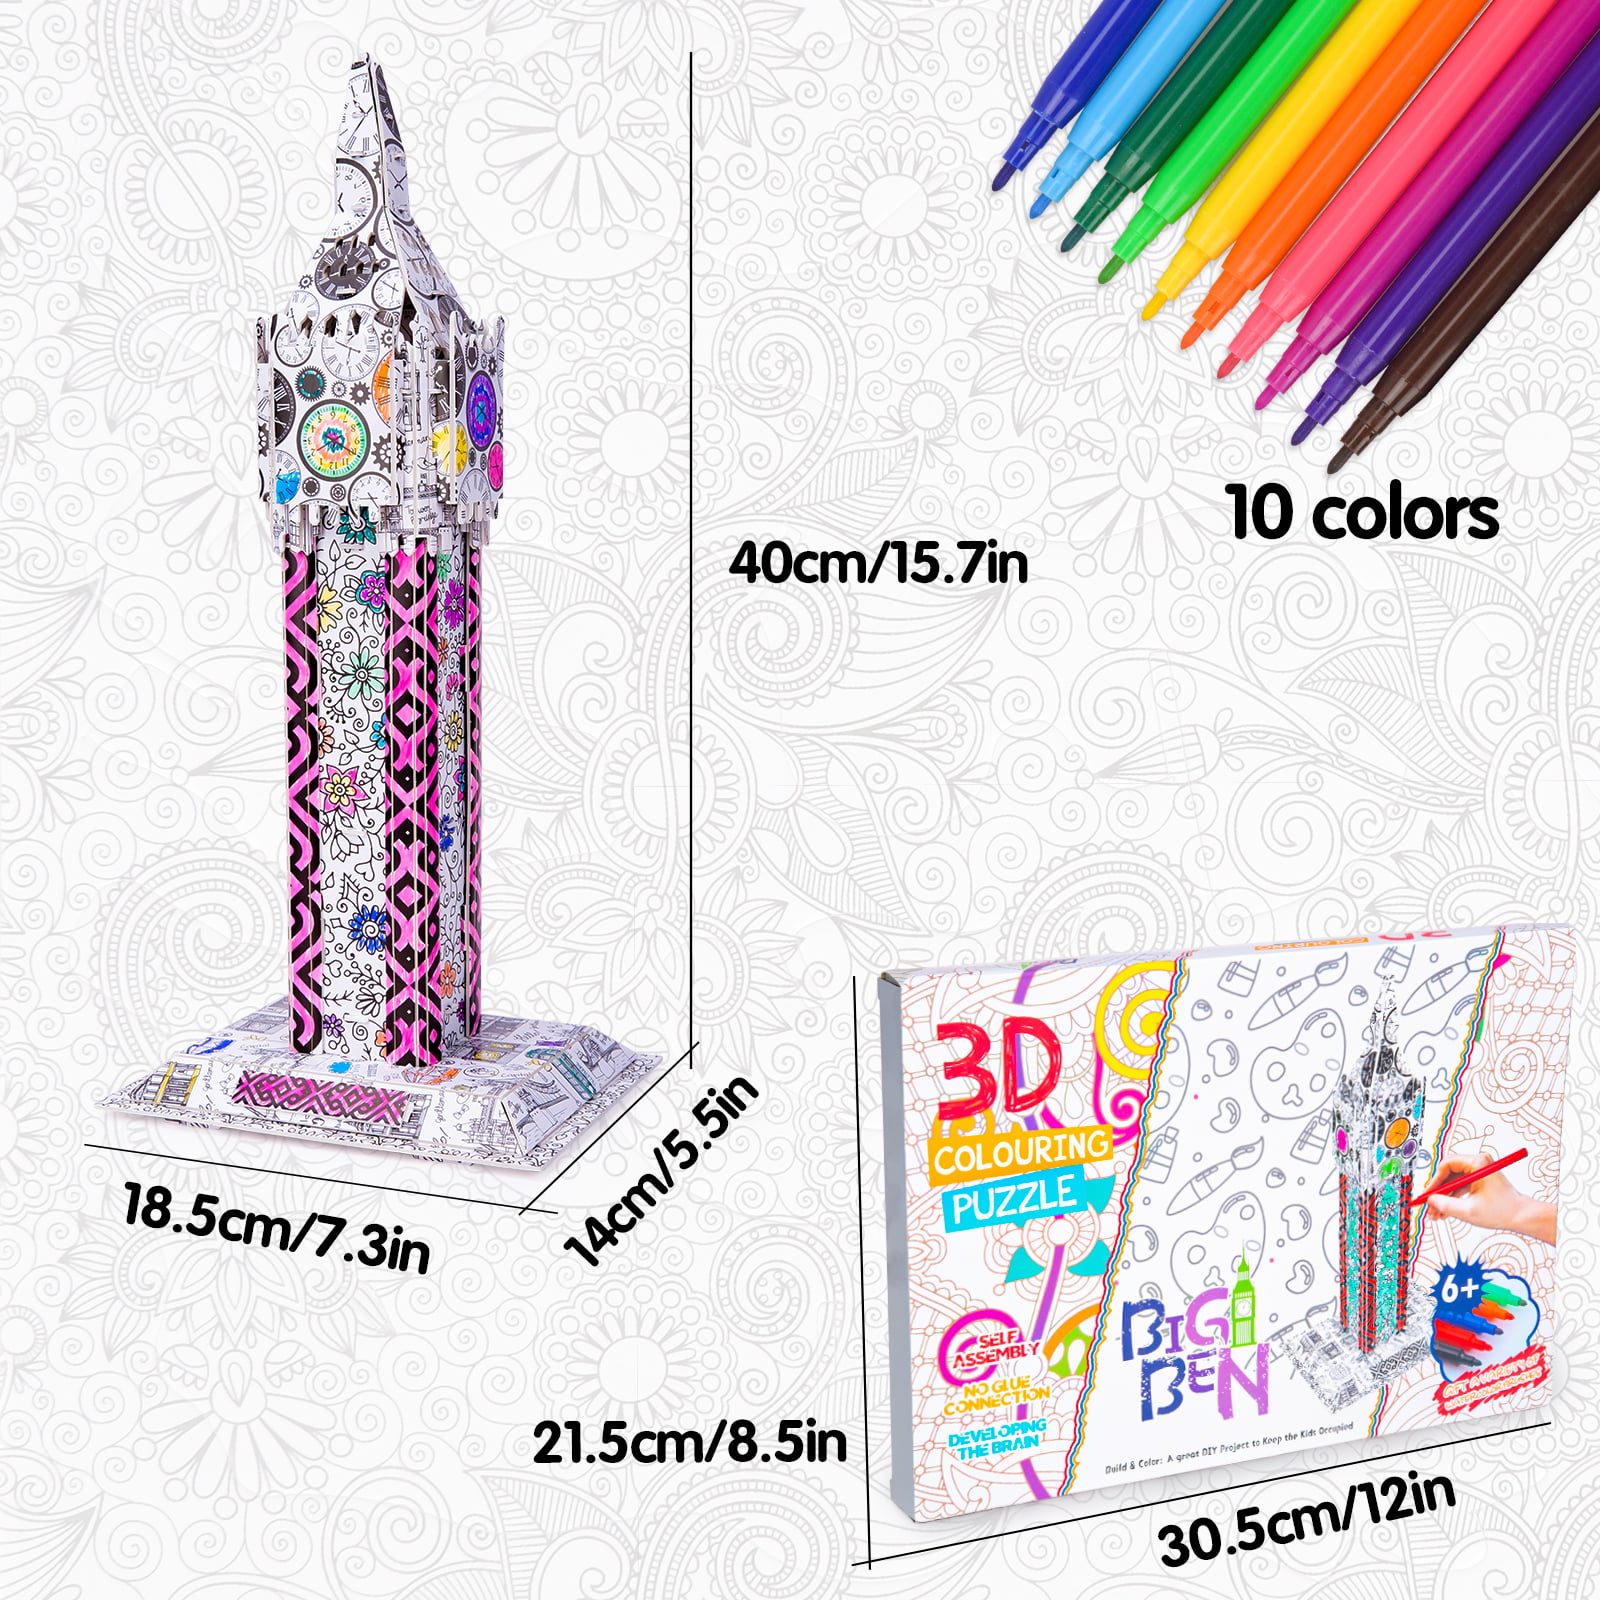  Arts Crafts for Kids Ages 6-8-12, 7 Sets Mandala 3D Coloring  Puzzles, Art Supplies for Kids 9-12 DIY 3D Puzzles for Kids Ages 3-5 4-8,  Crafts for Girls Ages 6-8-12, Origami